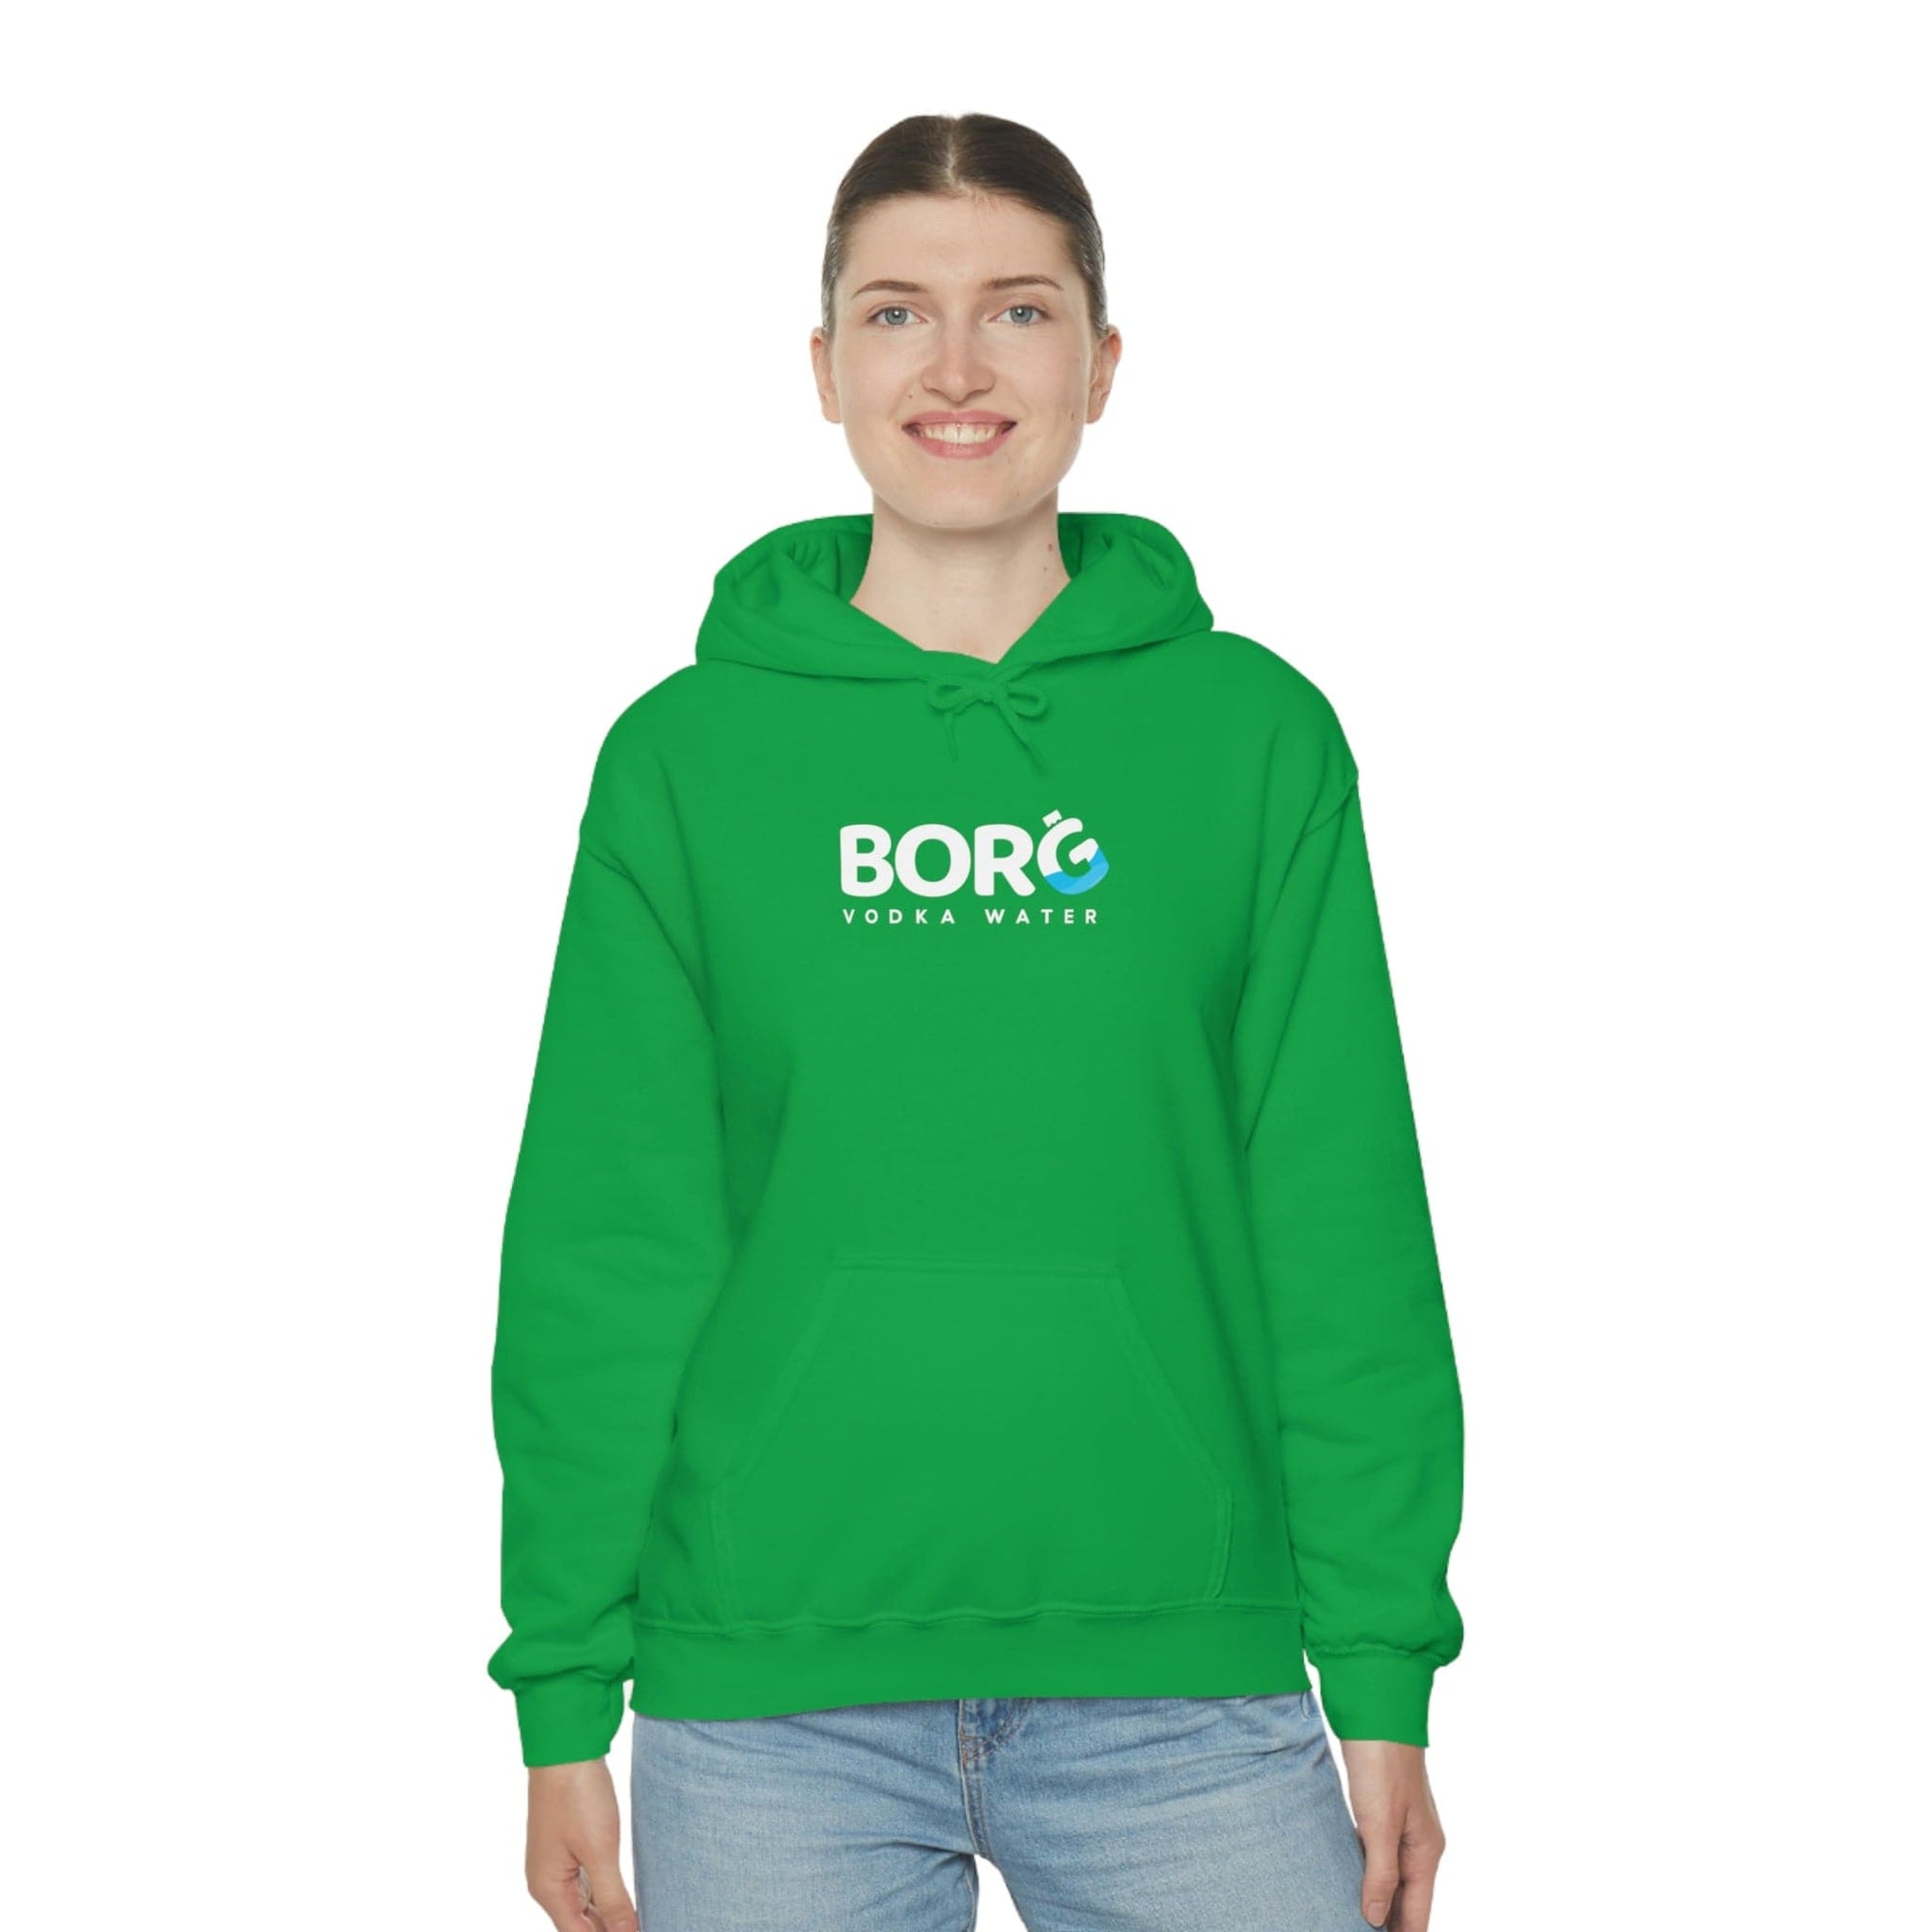 Girl model wearing the green Borg hooded sweatshirt